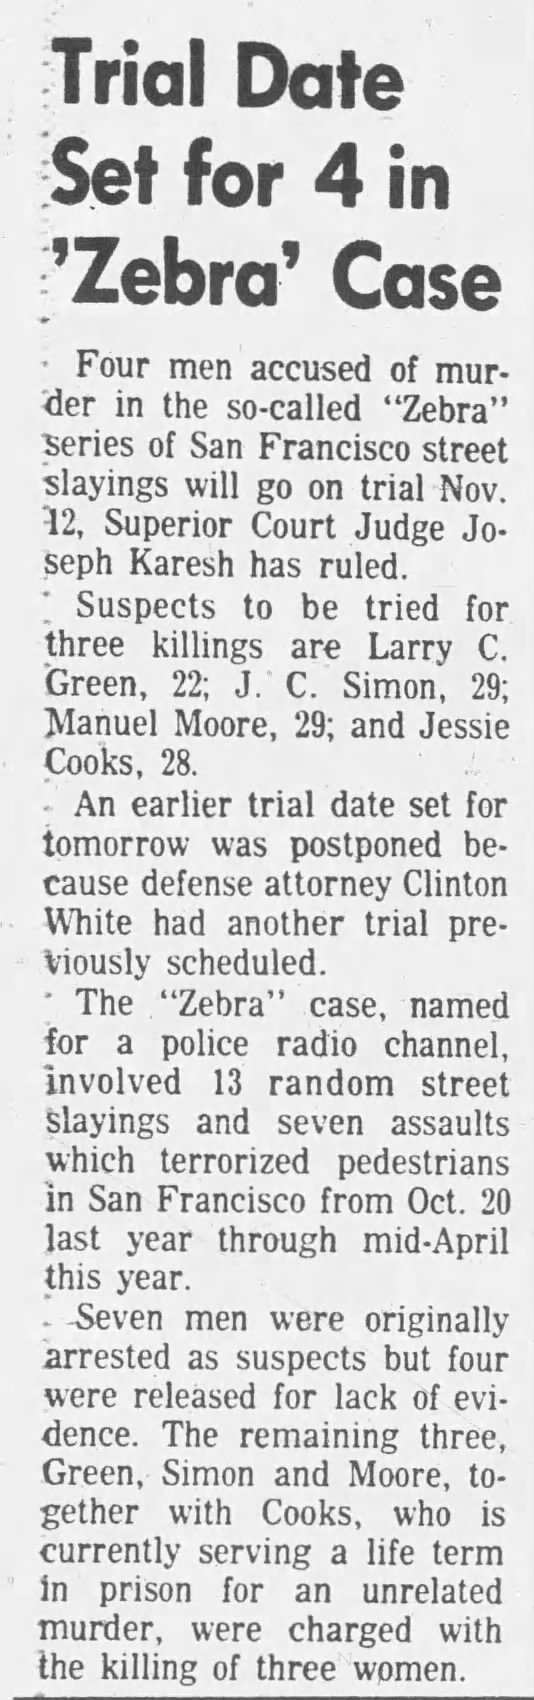 Trial Date Set for 4 in Zebra Case